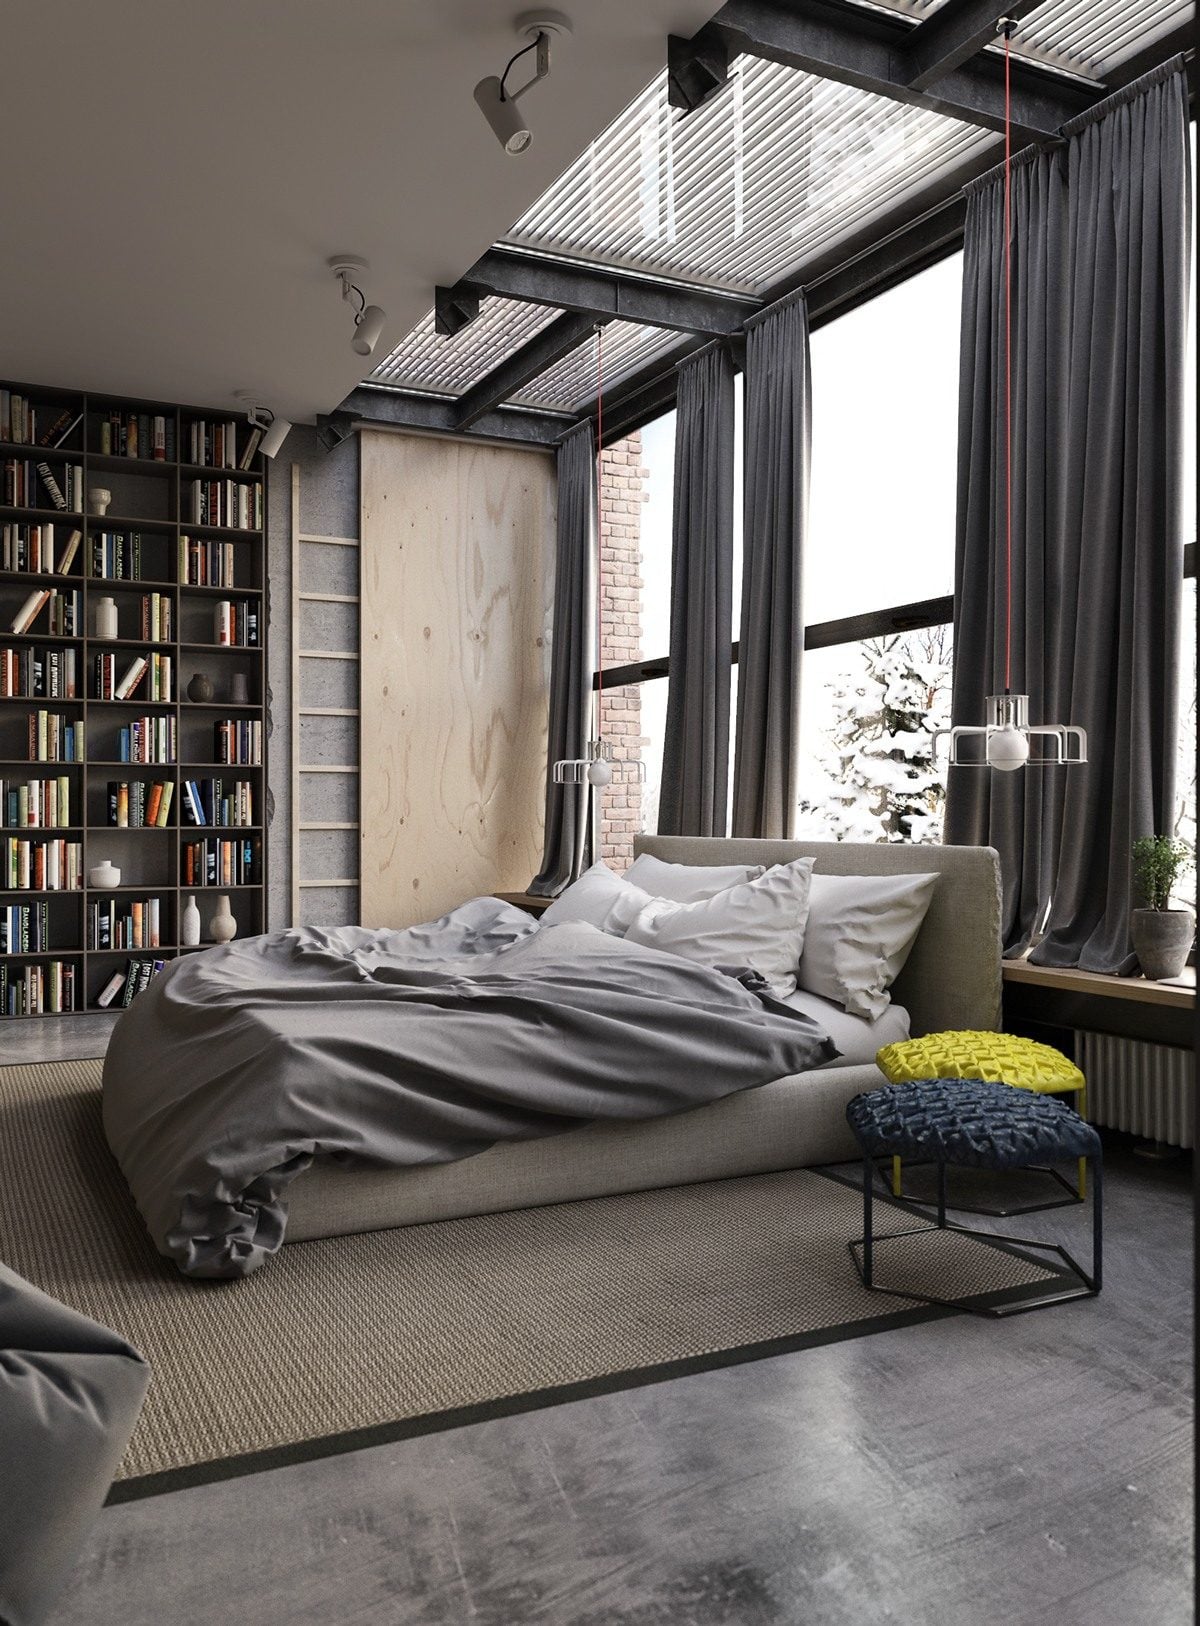 12gray-industrial-bedroom-decor